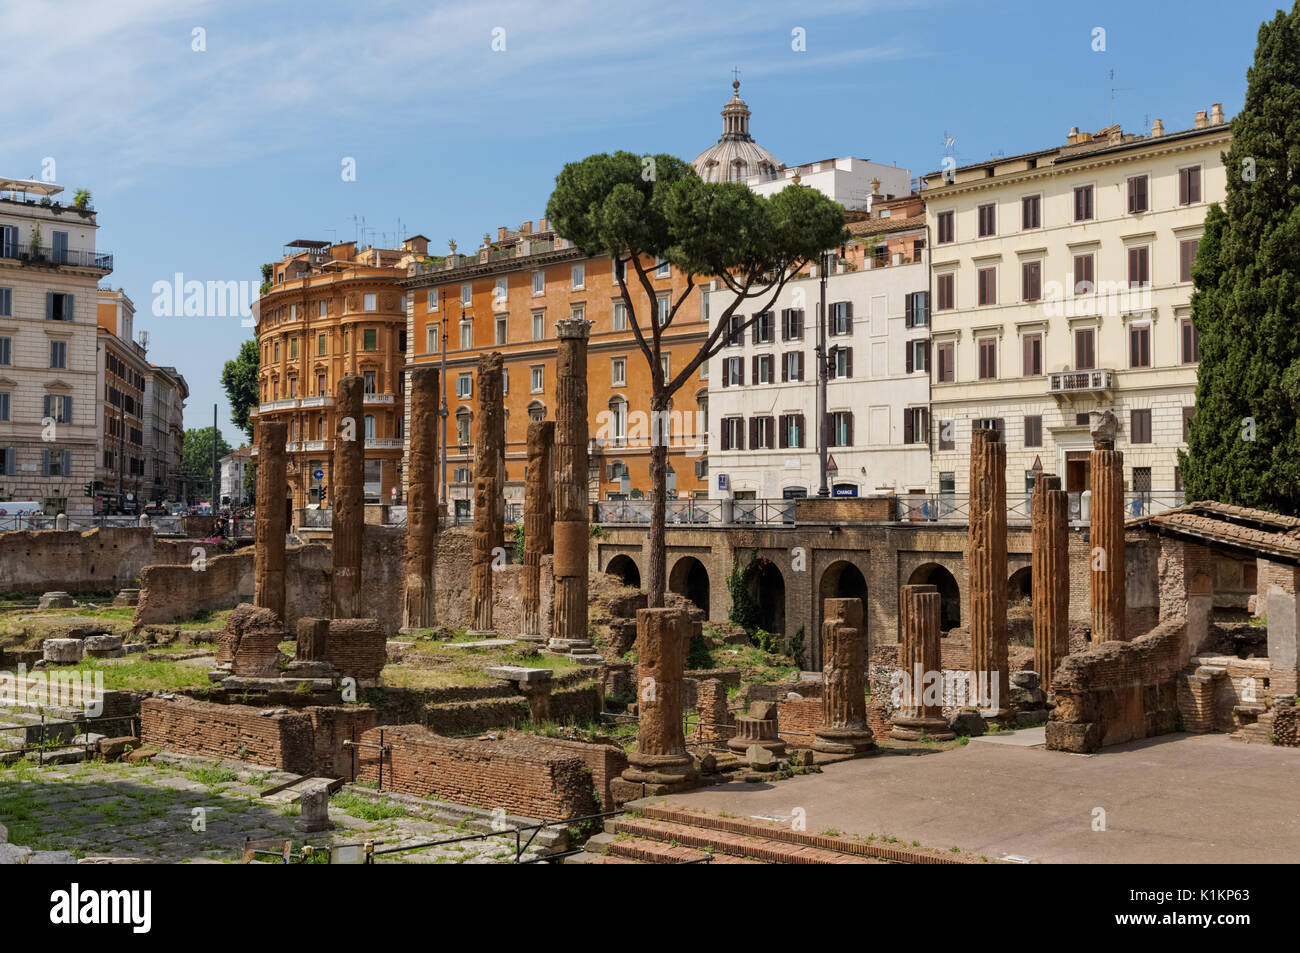 The Area Sacra, Largo di Torre Argentina square in Rome, Italy Stock Photo